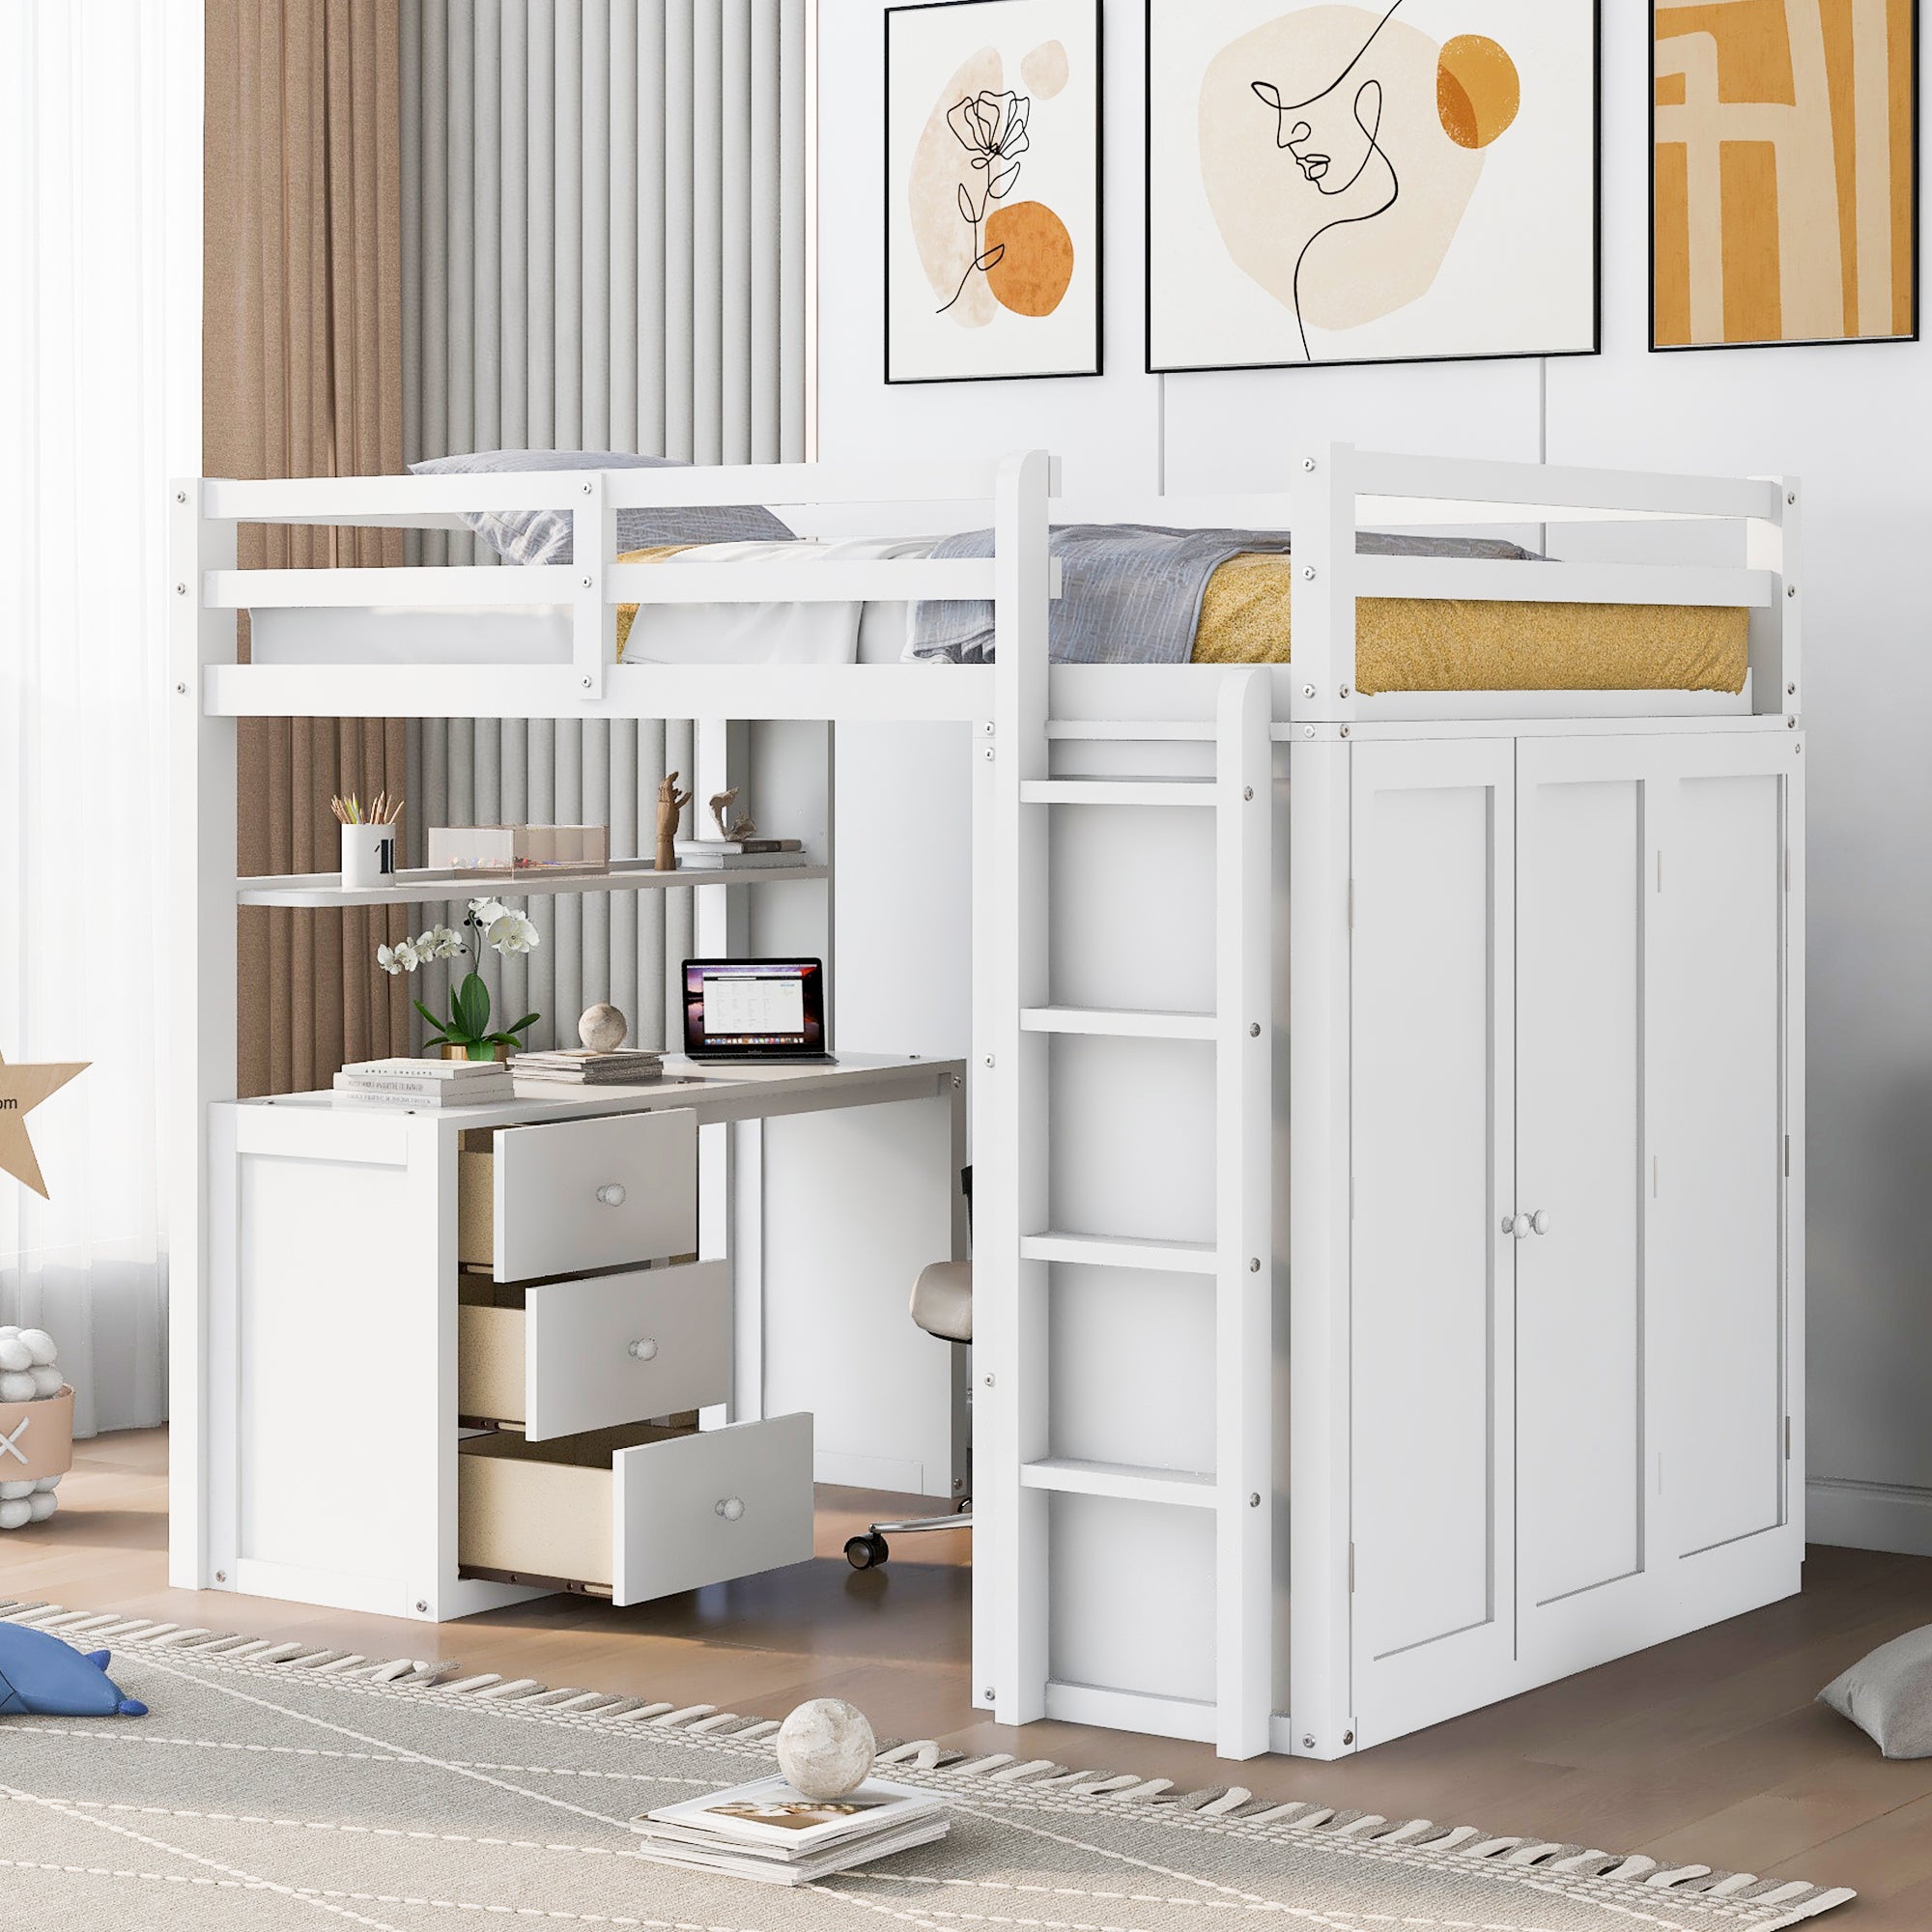 Bellemave® Full Size Loft Bed with Drawers,Desk and Wardrobe Bellemave®